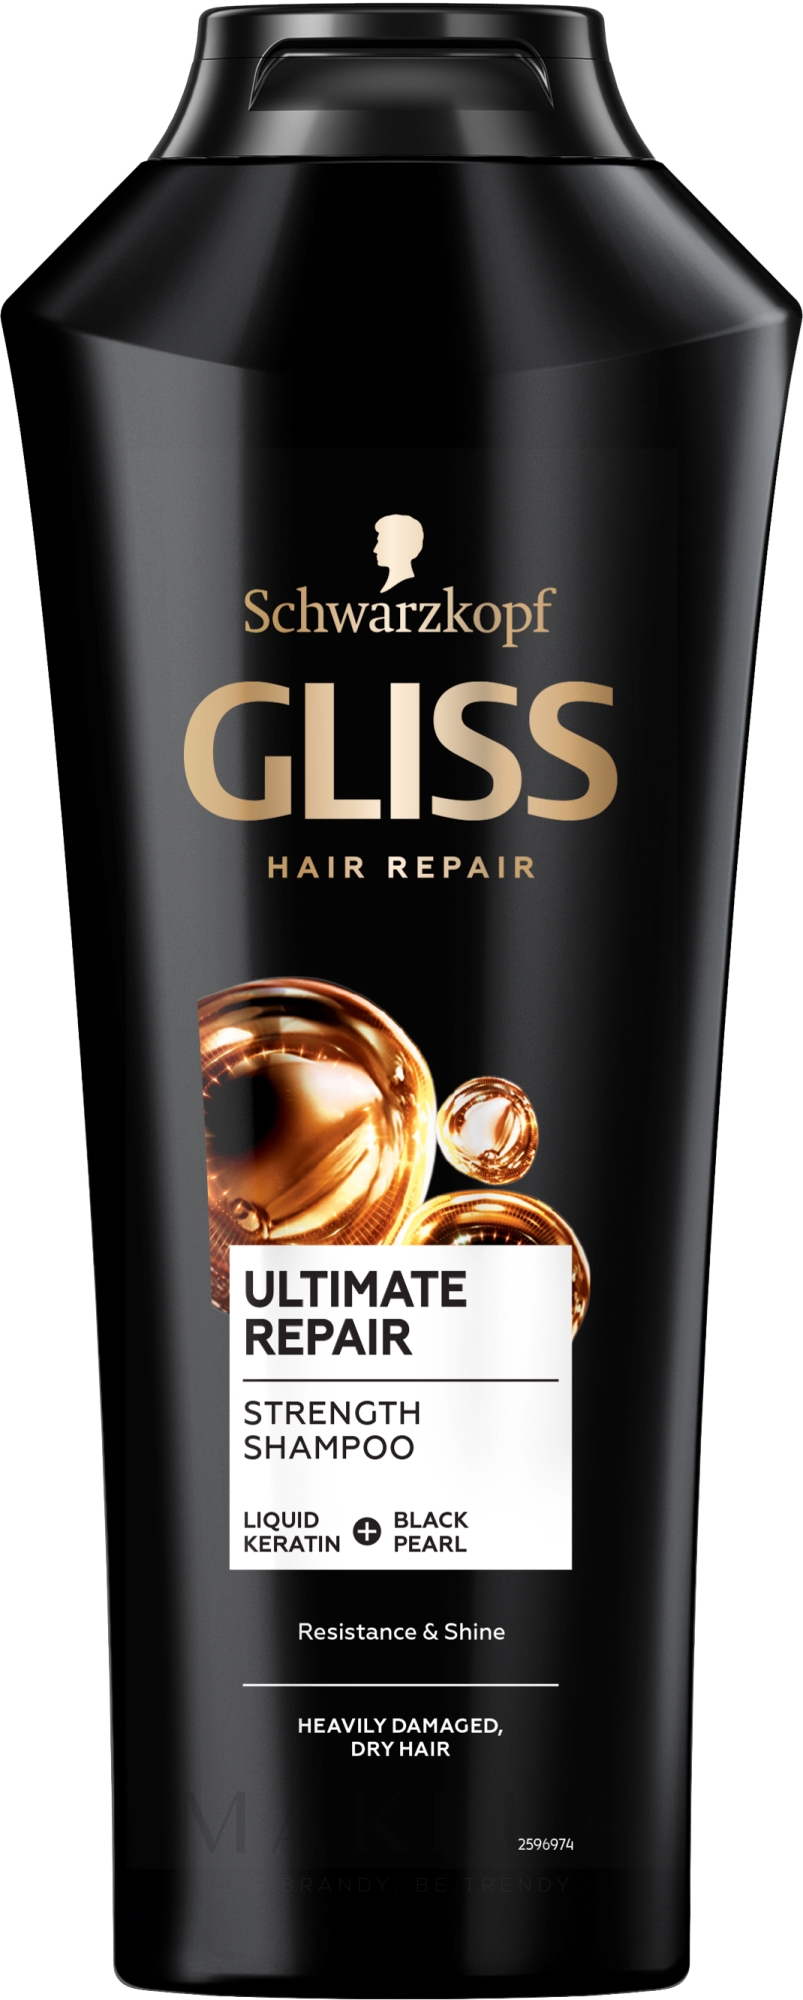 szampon gliss kur total repair